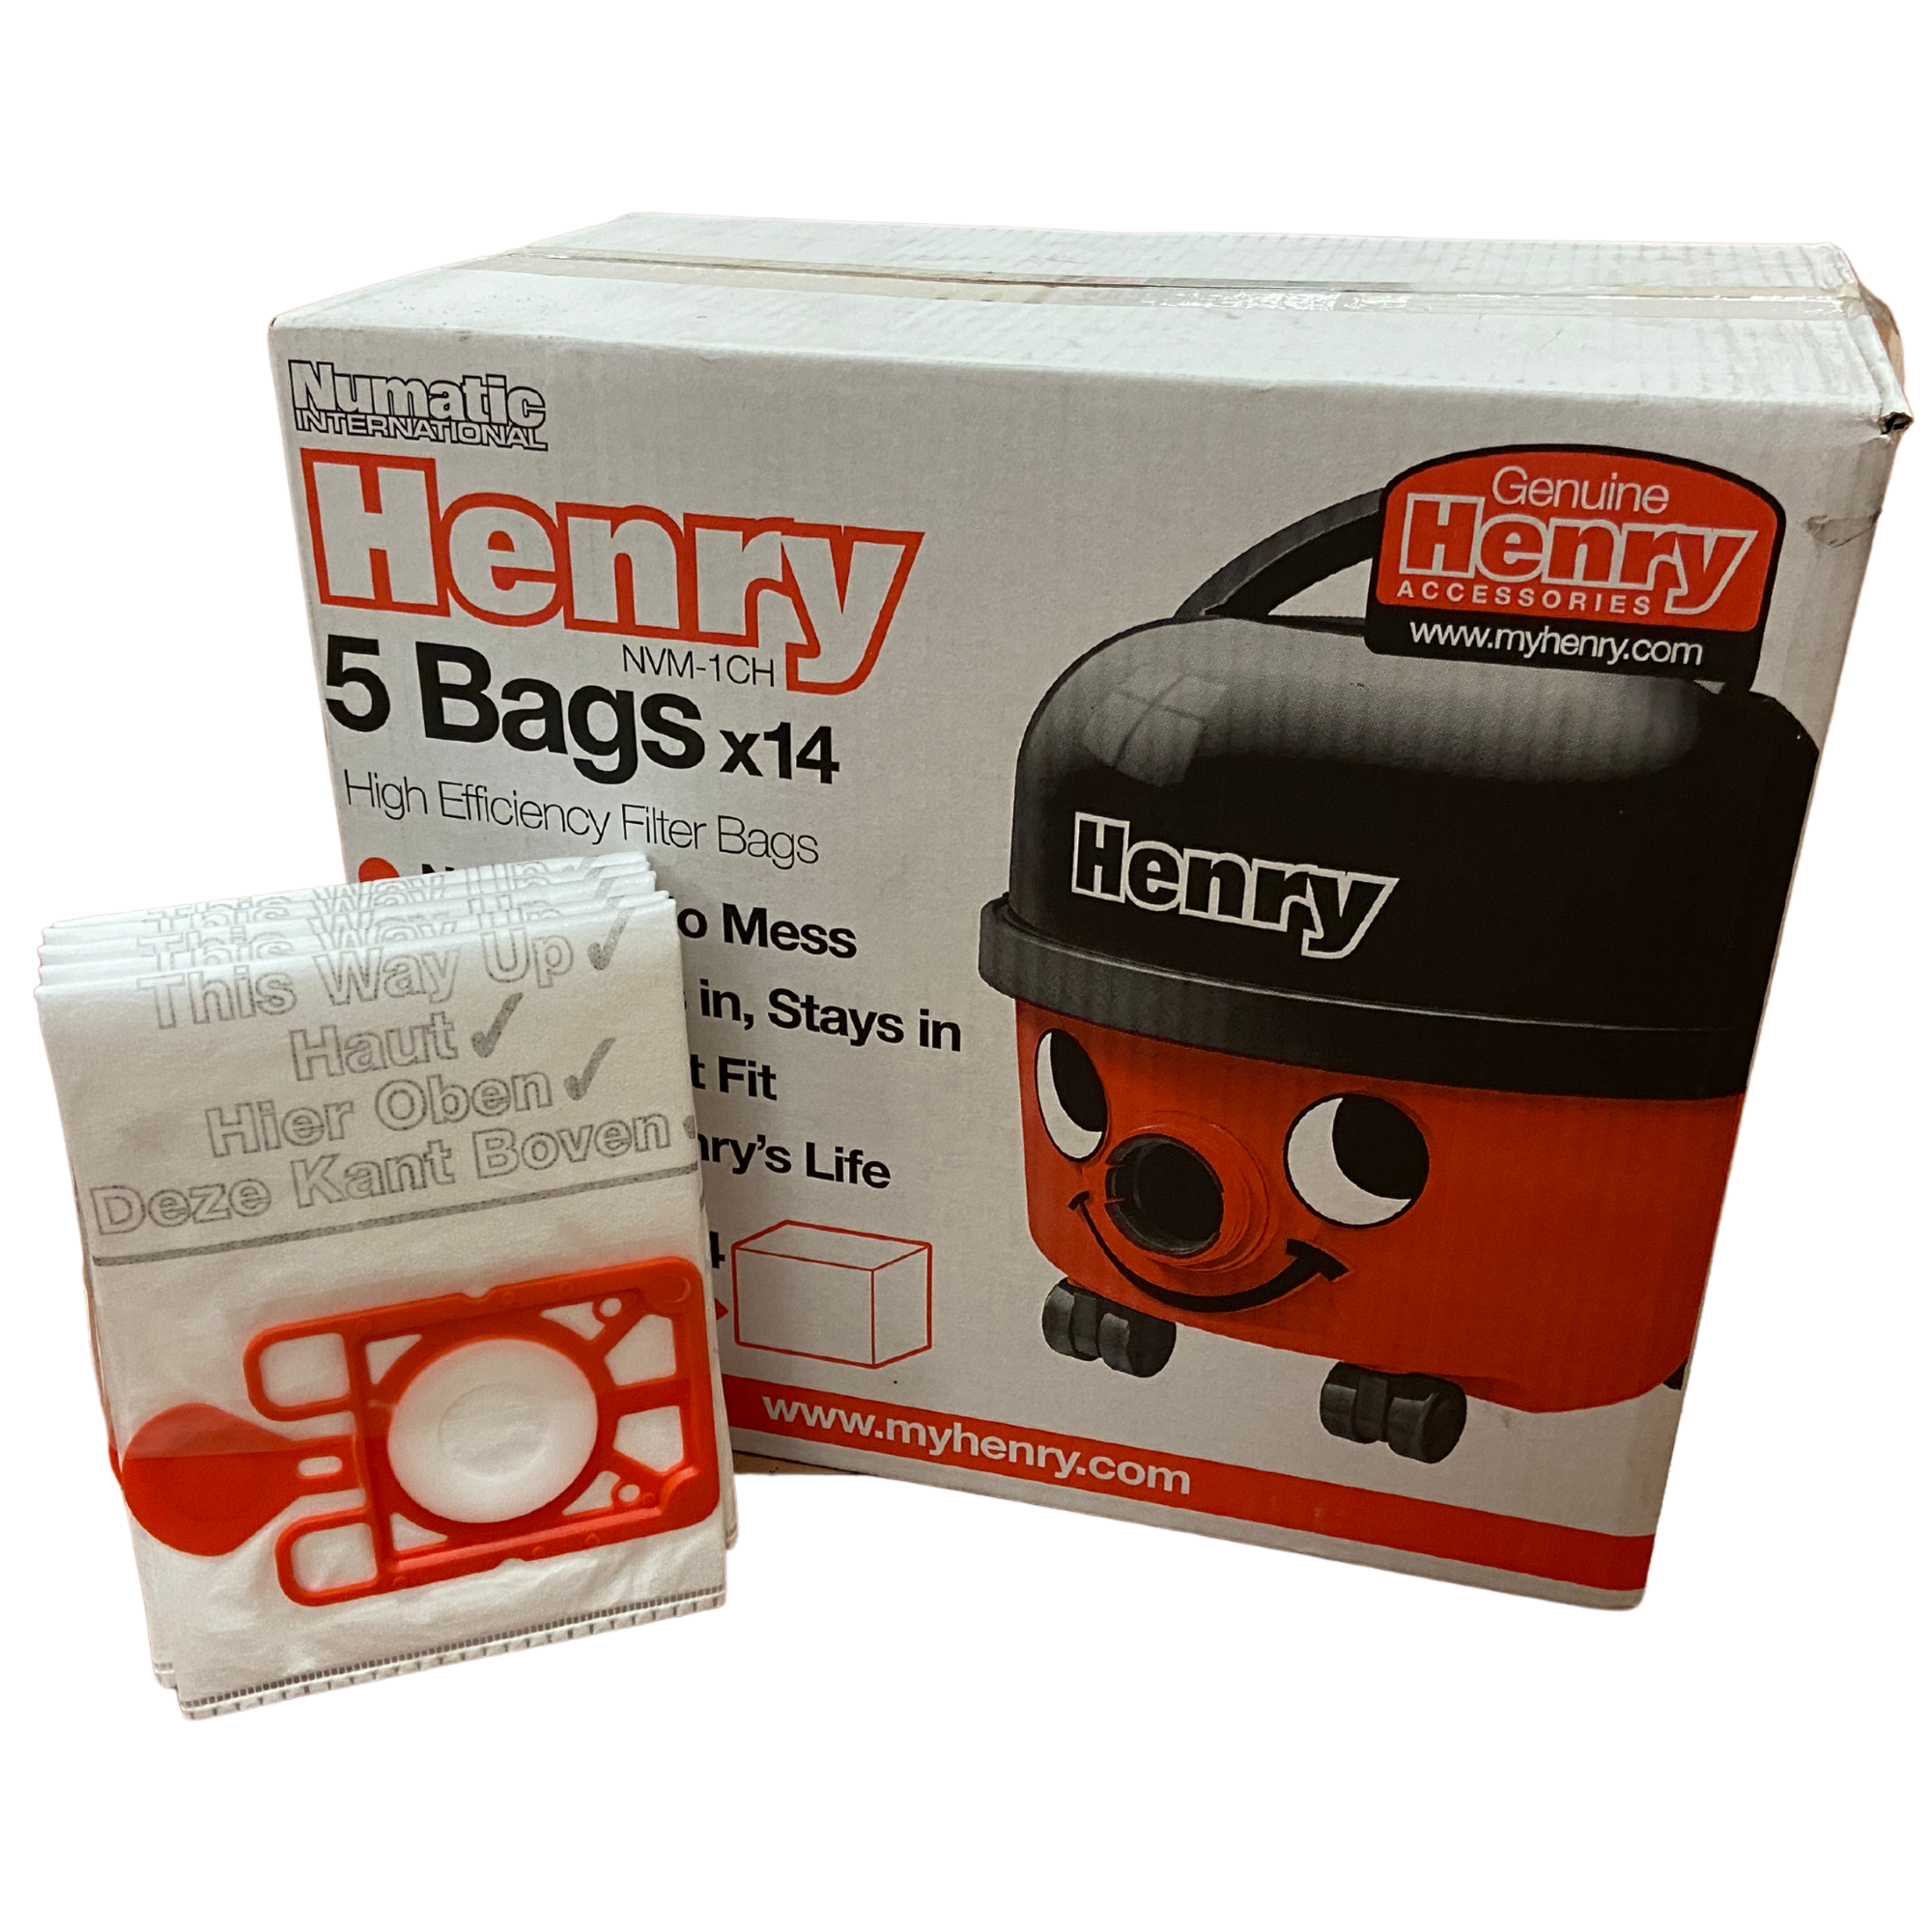 Henry HepaFlo Bag Carton of 70